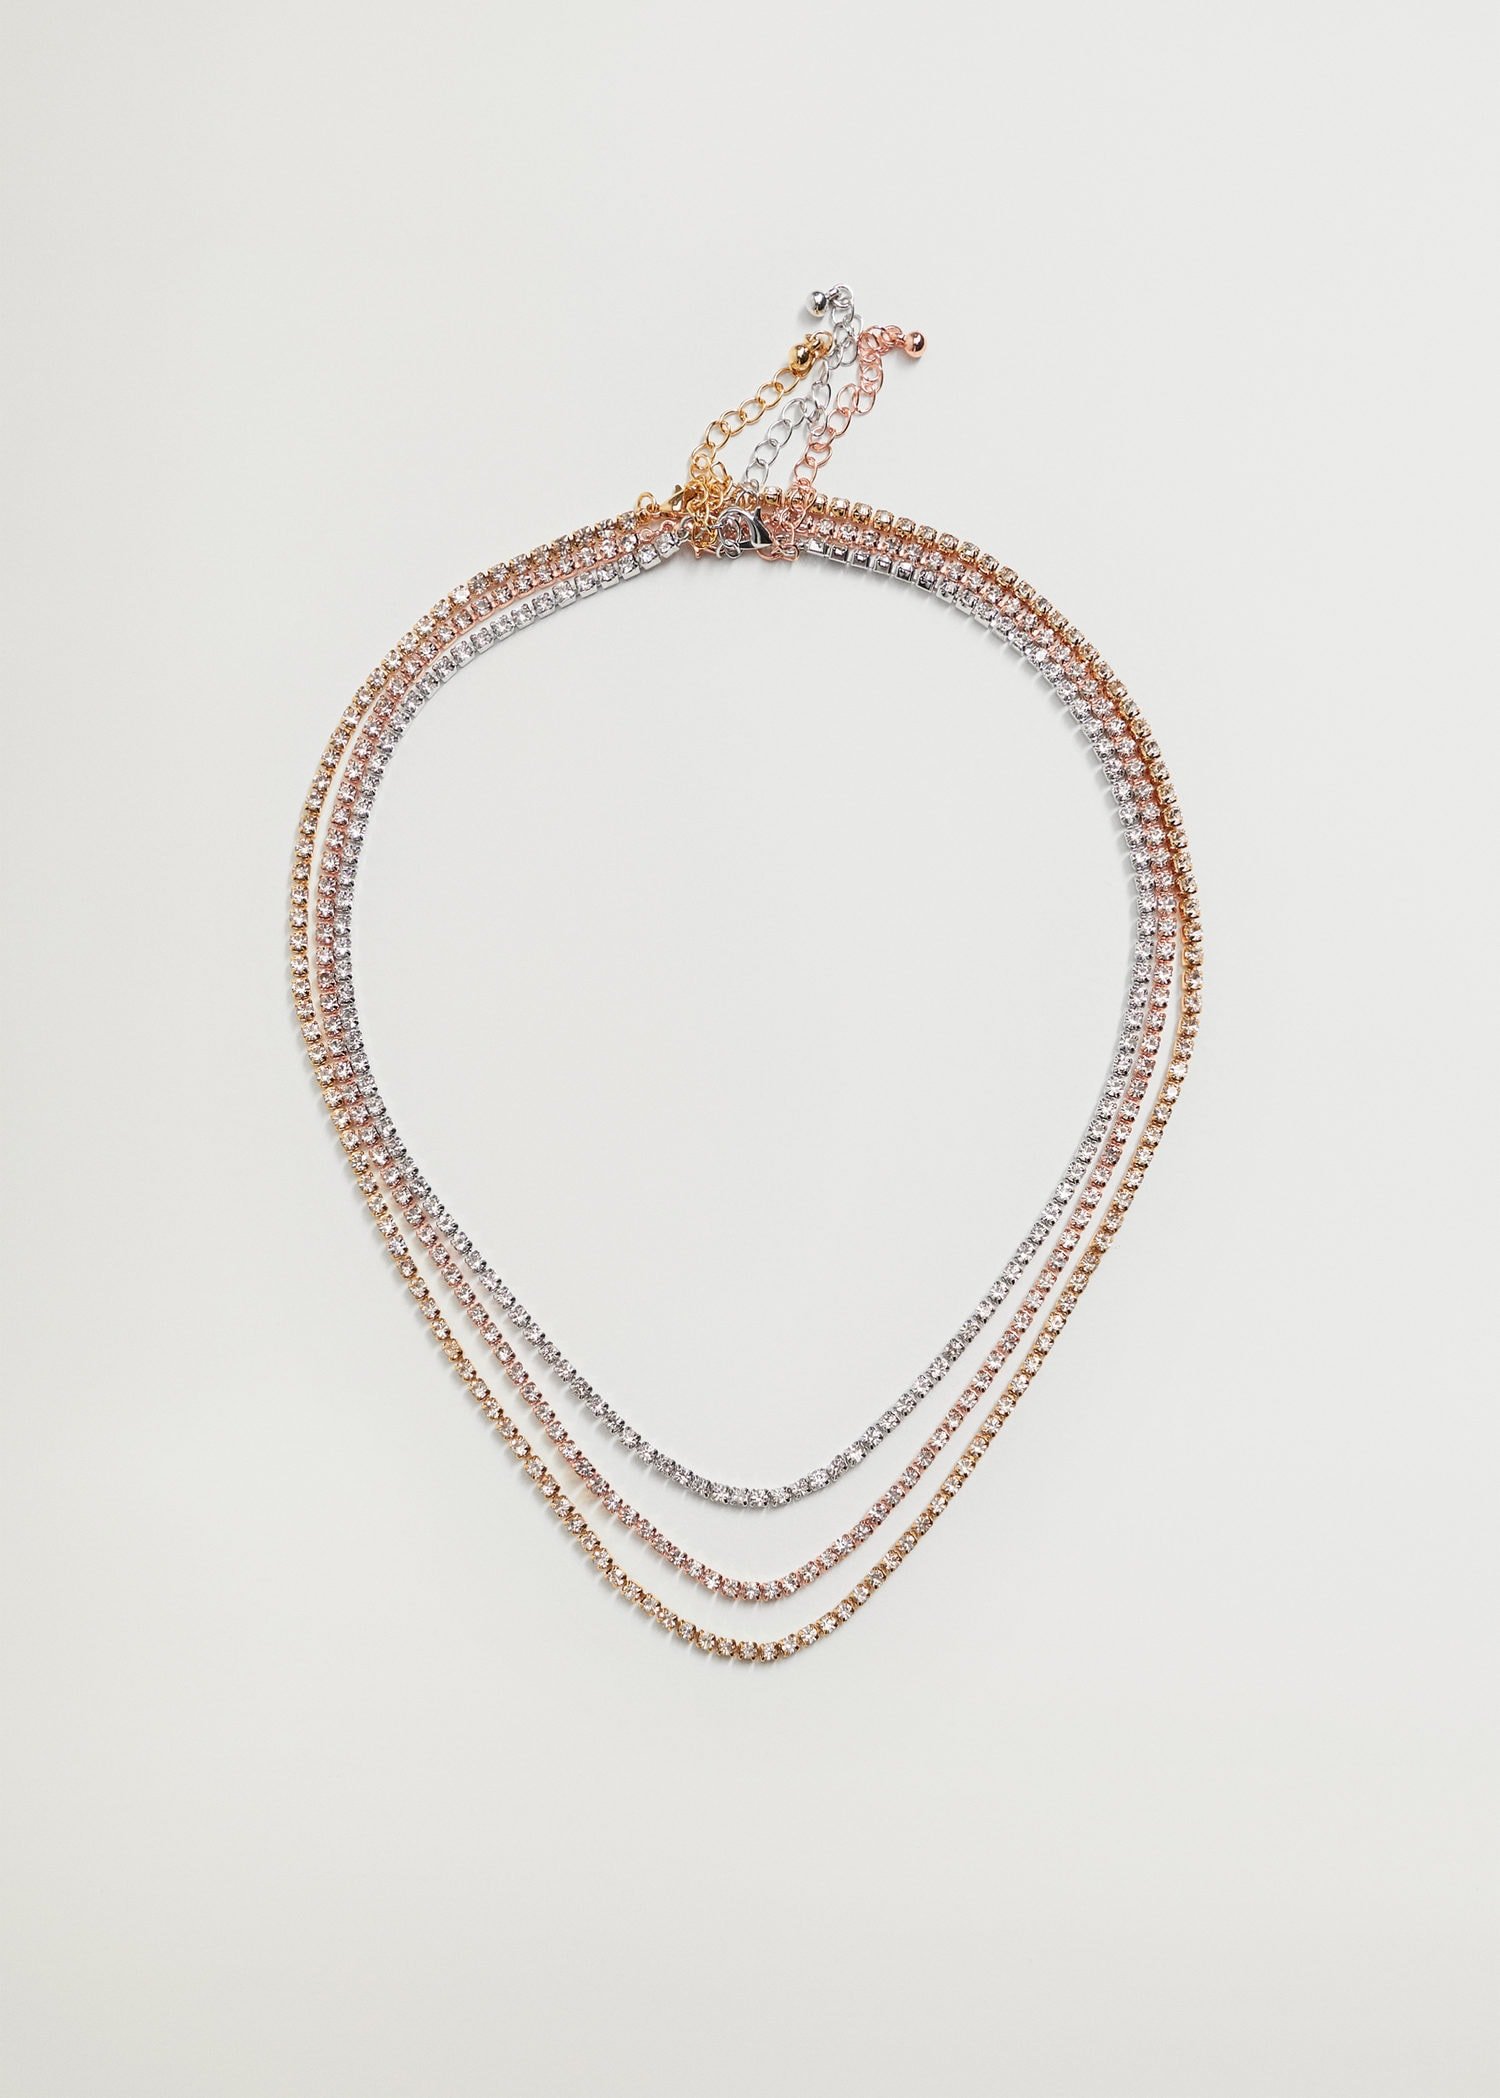 Rhinestone crystal body necklace